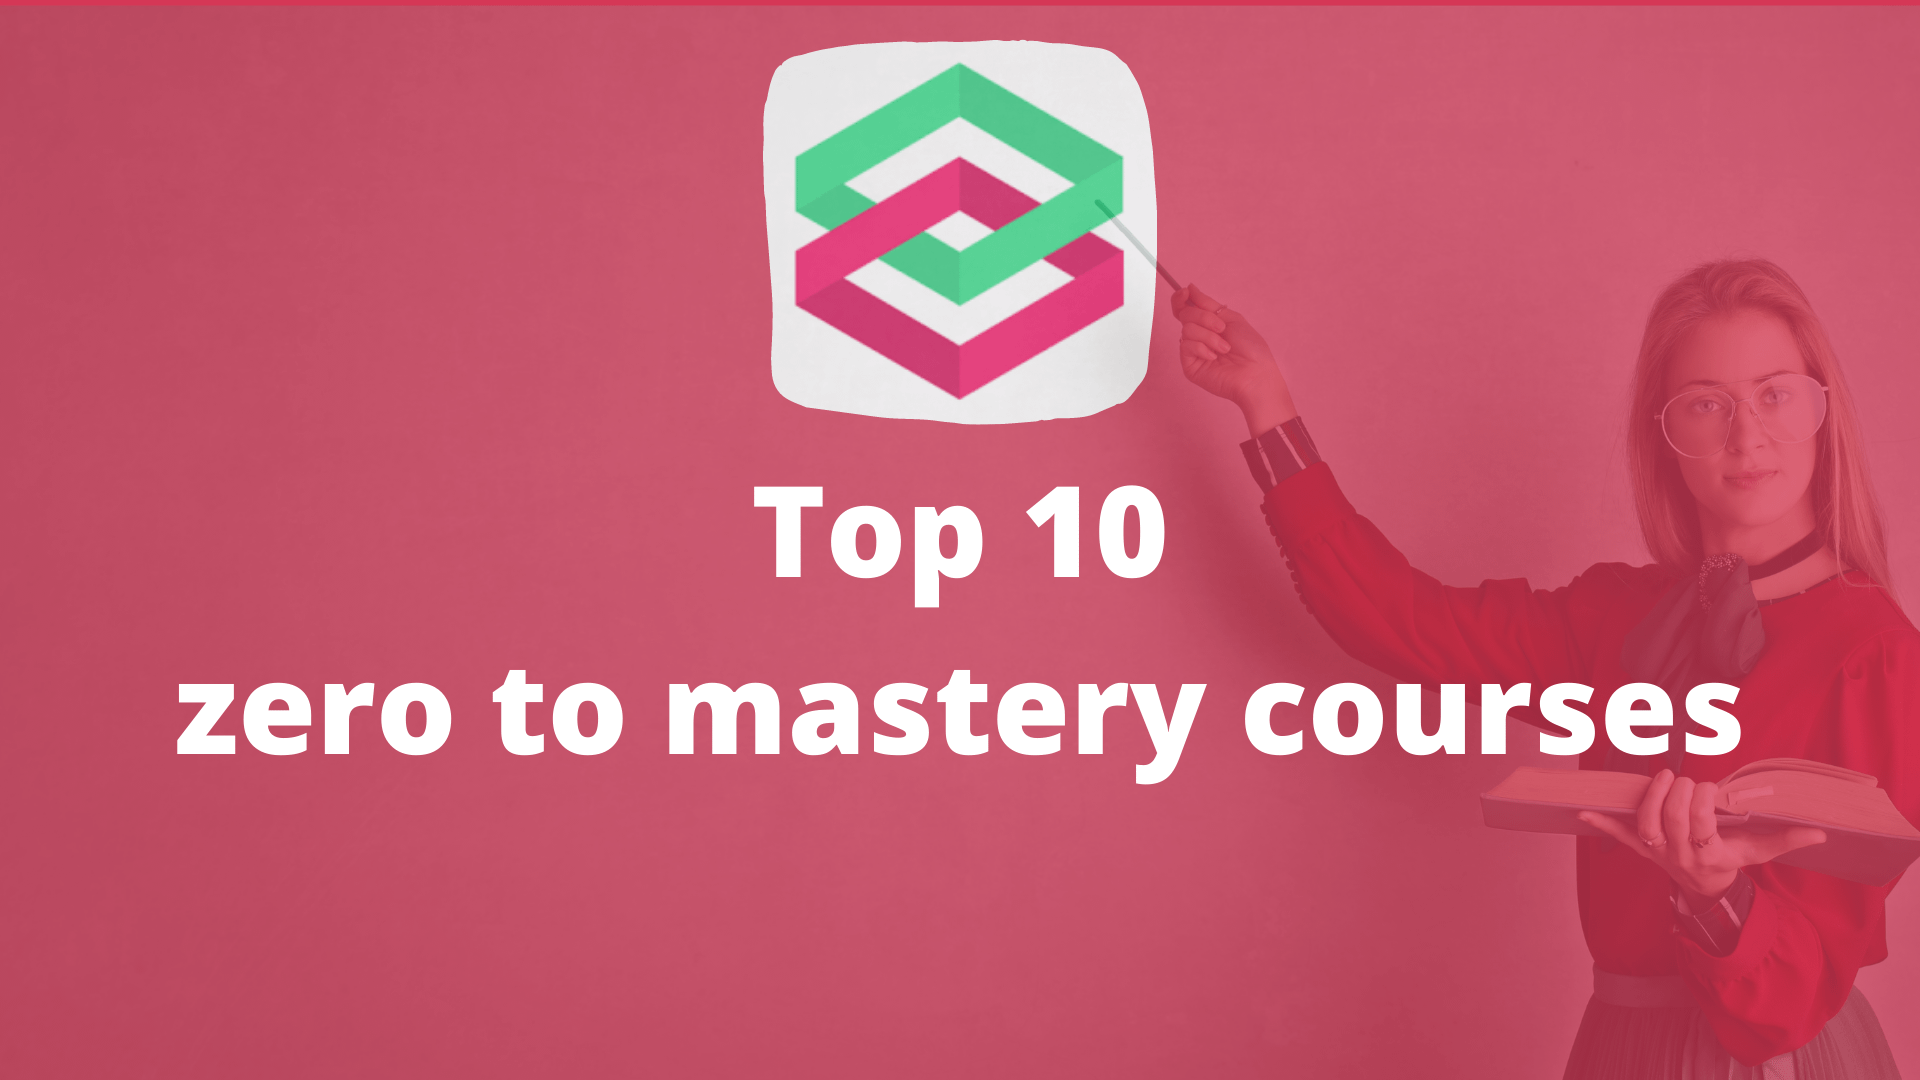 Top 10 zero to mastery courses